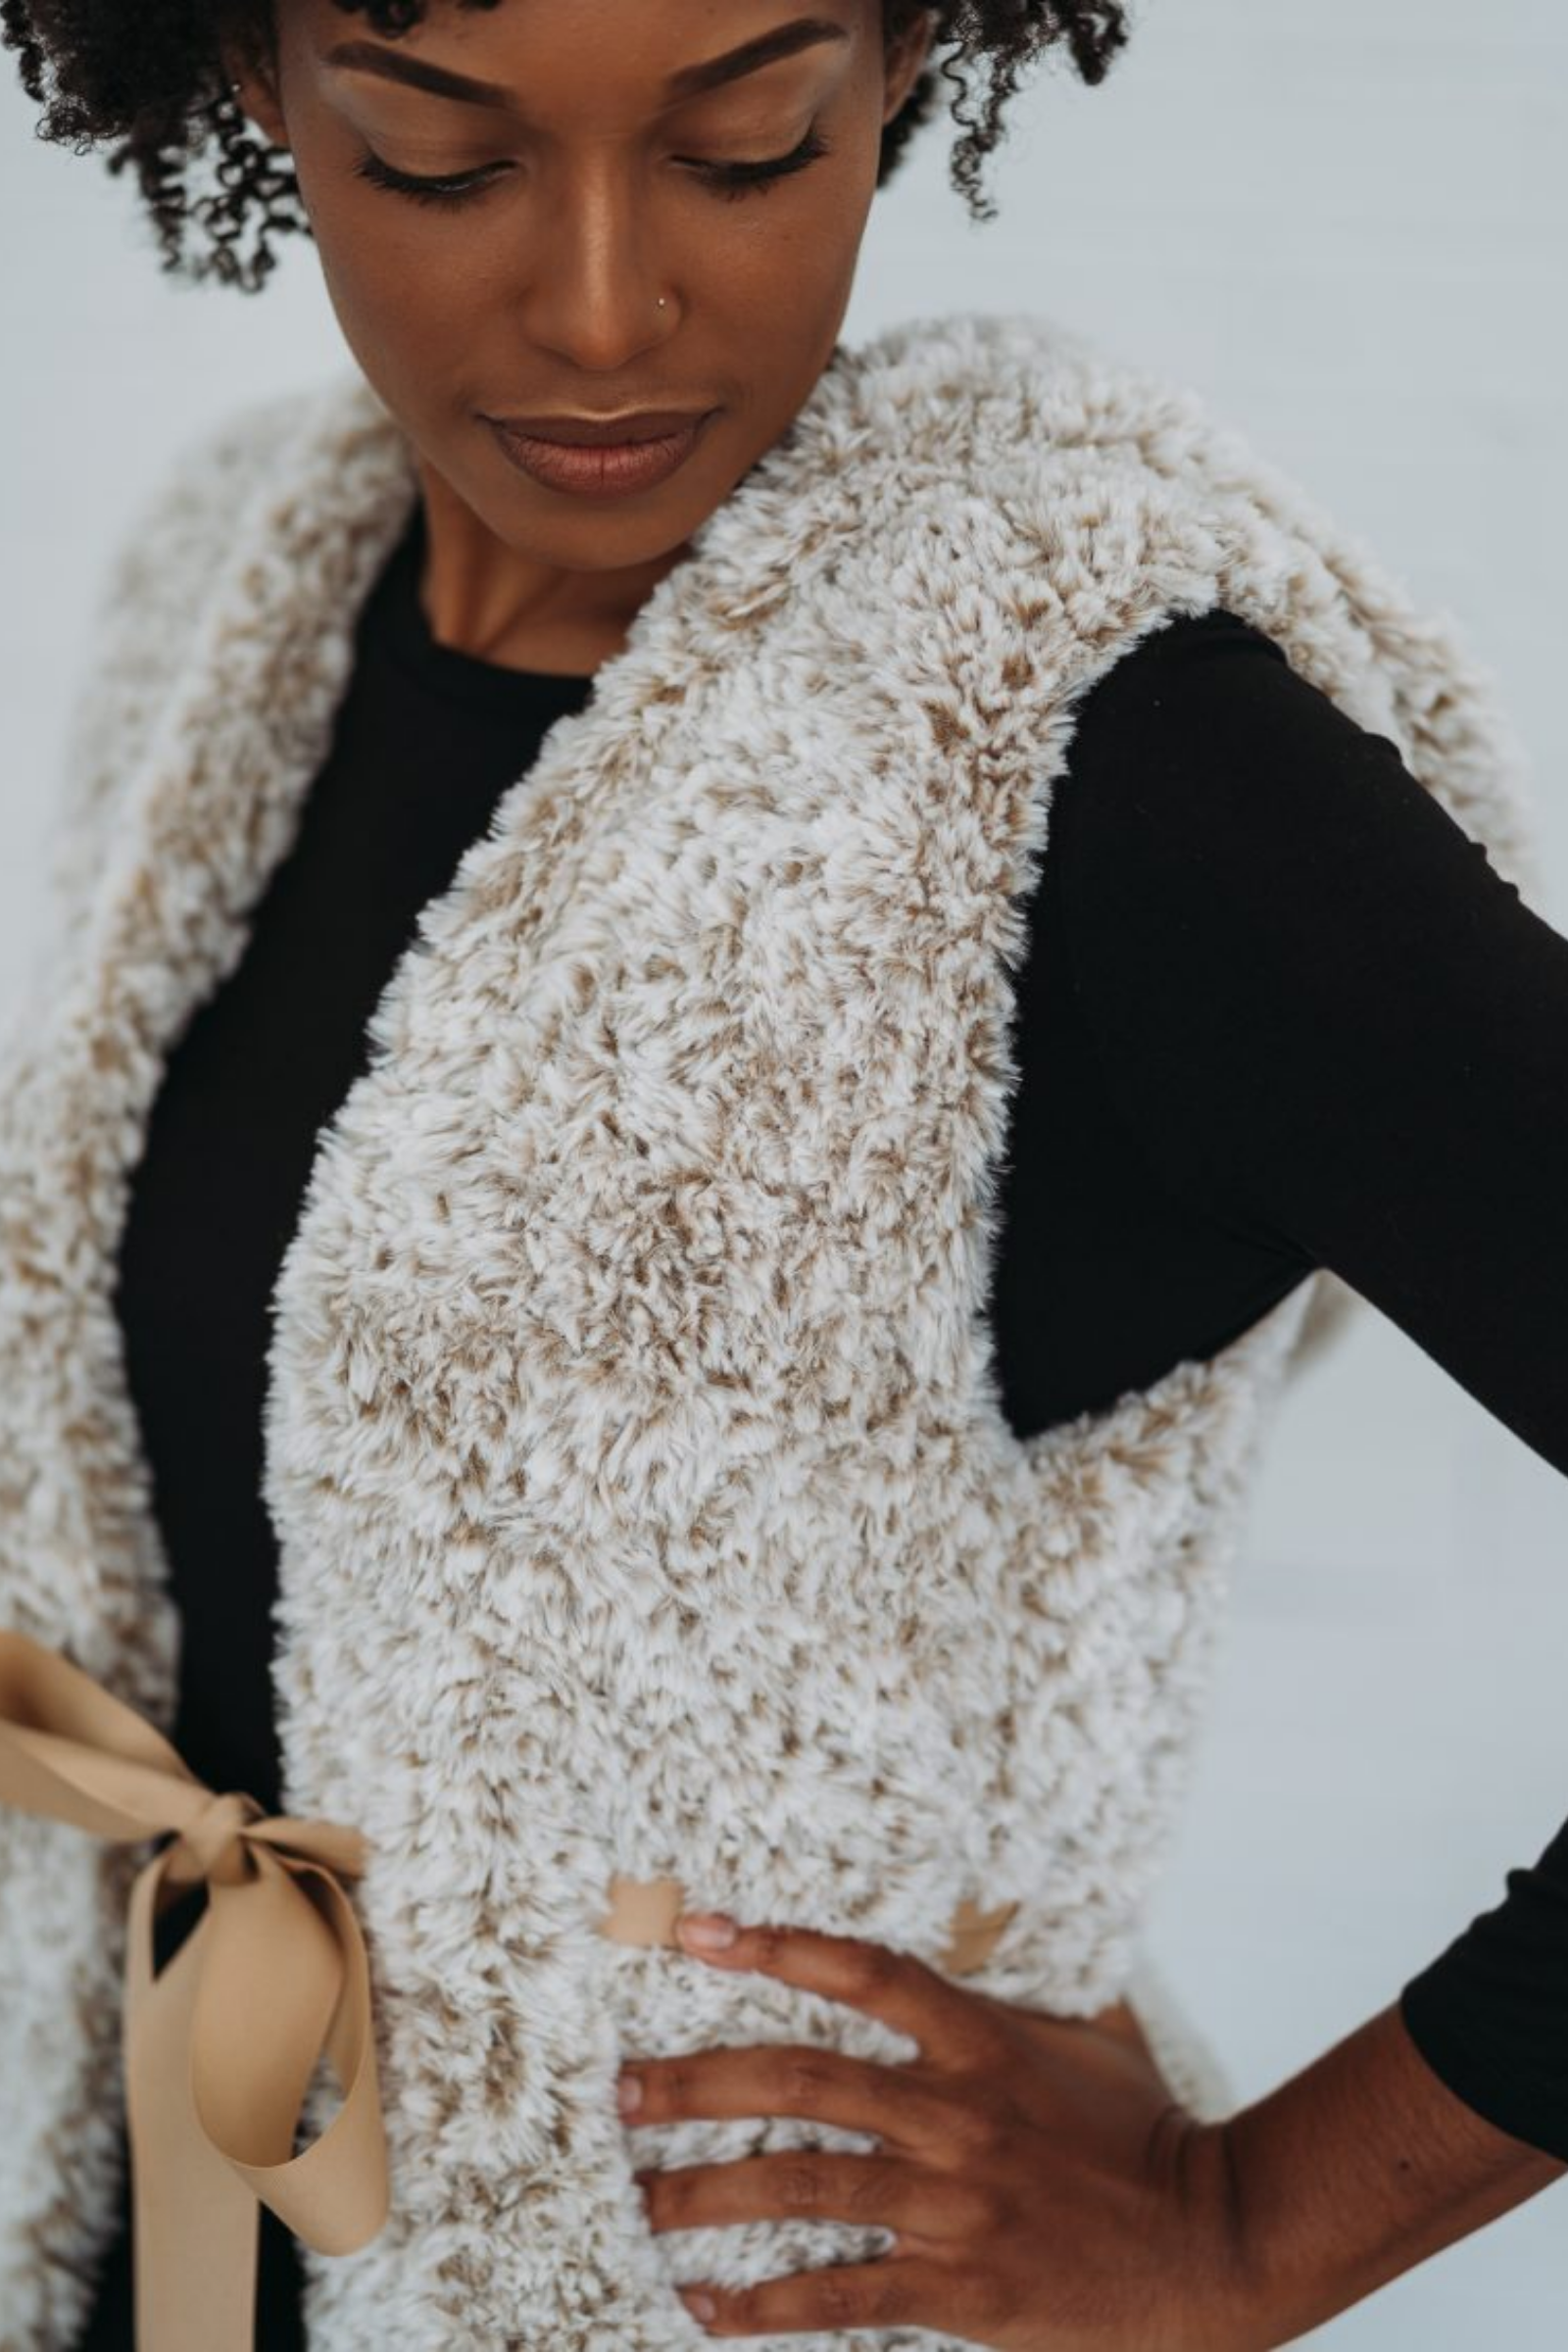 The Mika Vest, a festive hooded faux fur crochet vest pattern - TL Yarn  Crafts